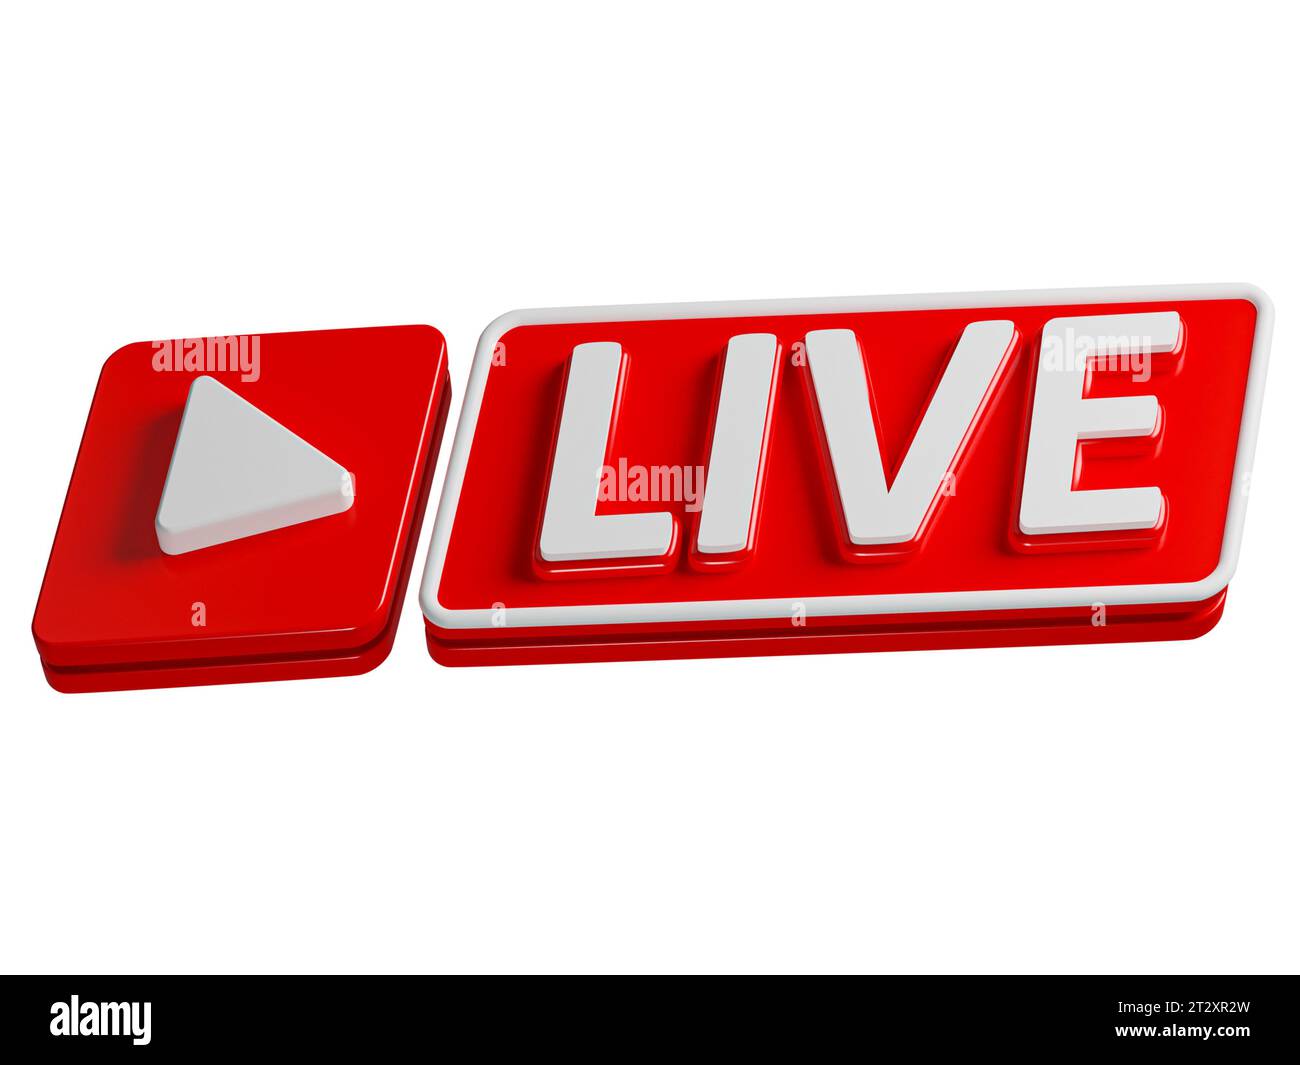 youtube live logo Stock Photo